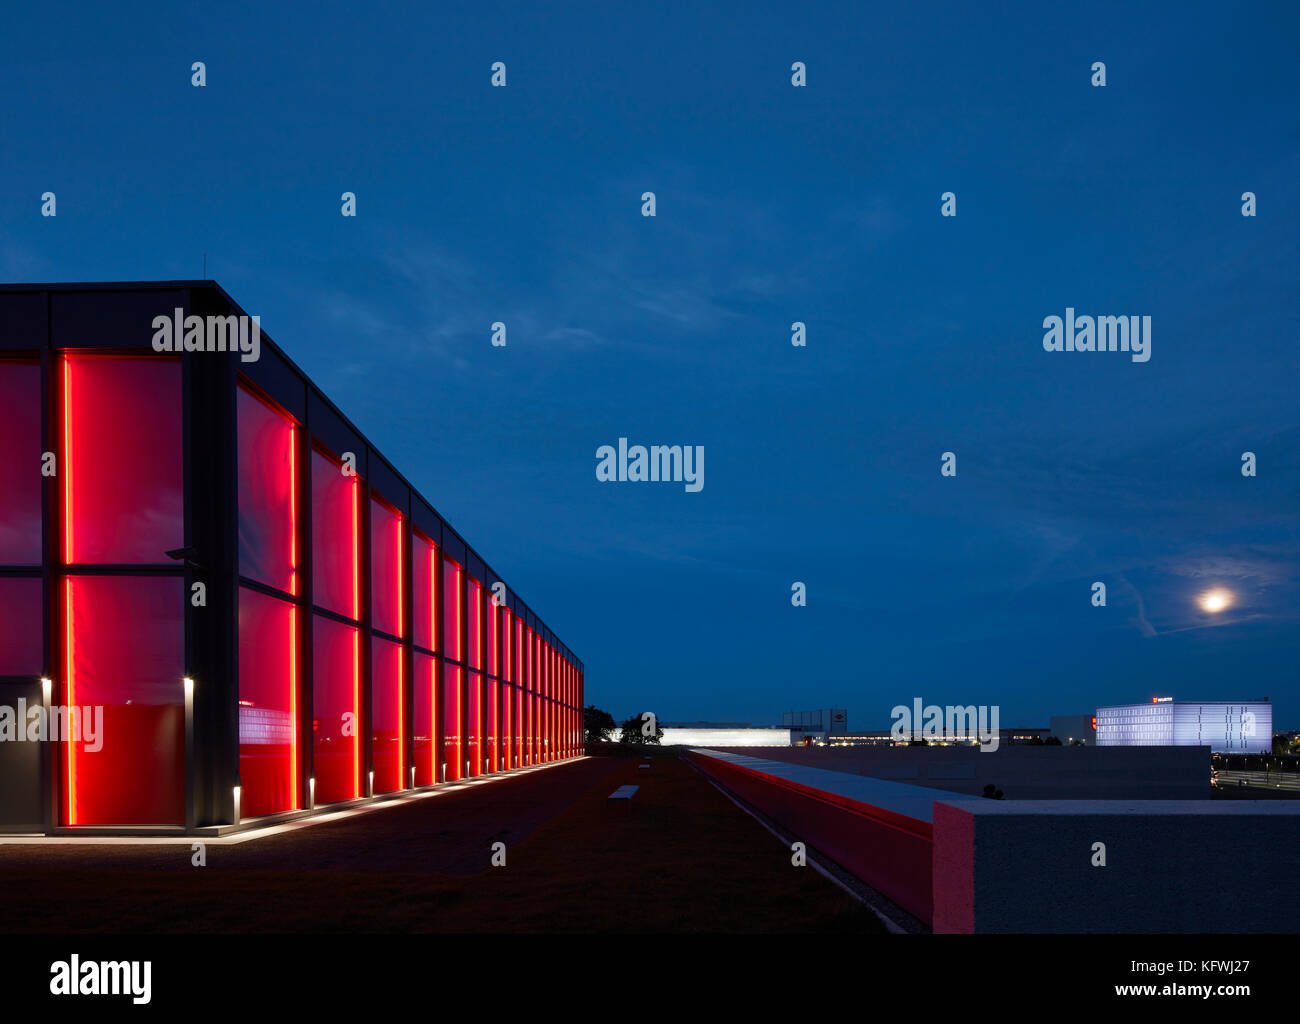 Night - illumination in red. Carmen Würth Forum, Künzelsau-Gaisbach, Germany. Architect: David Chipperfield Architects Ltd, 2017. Stock Photo